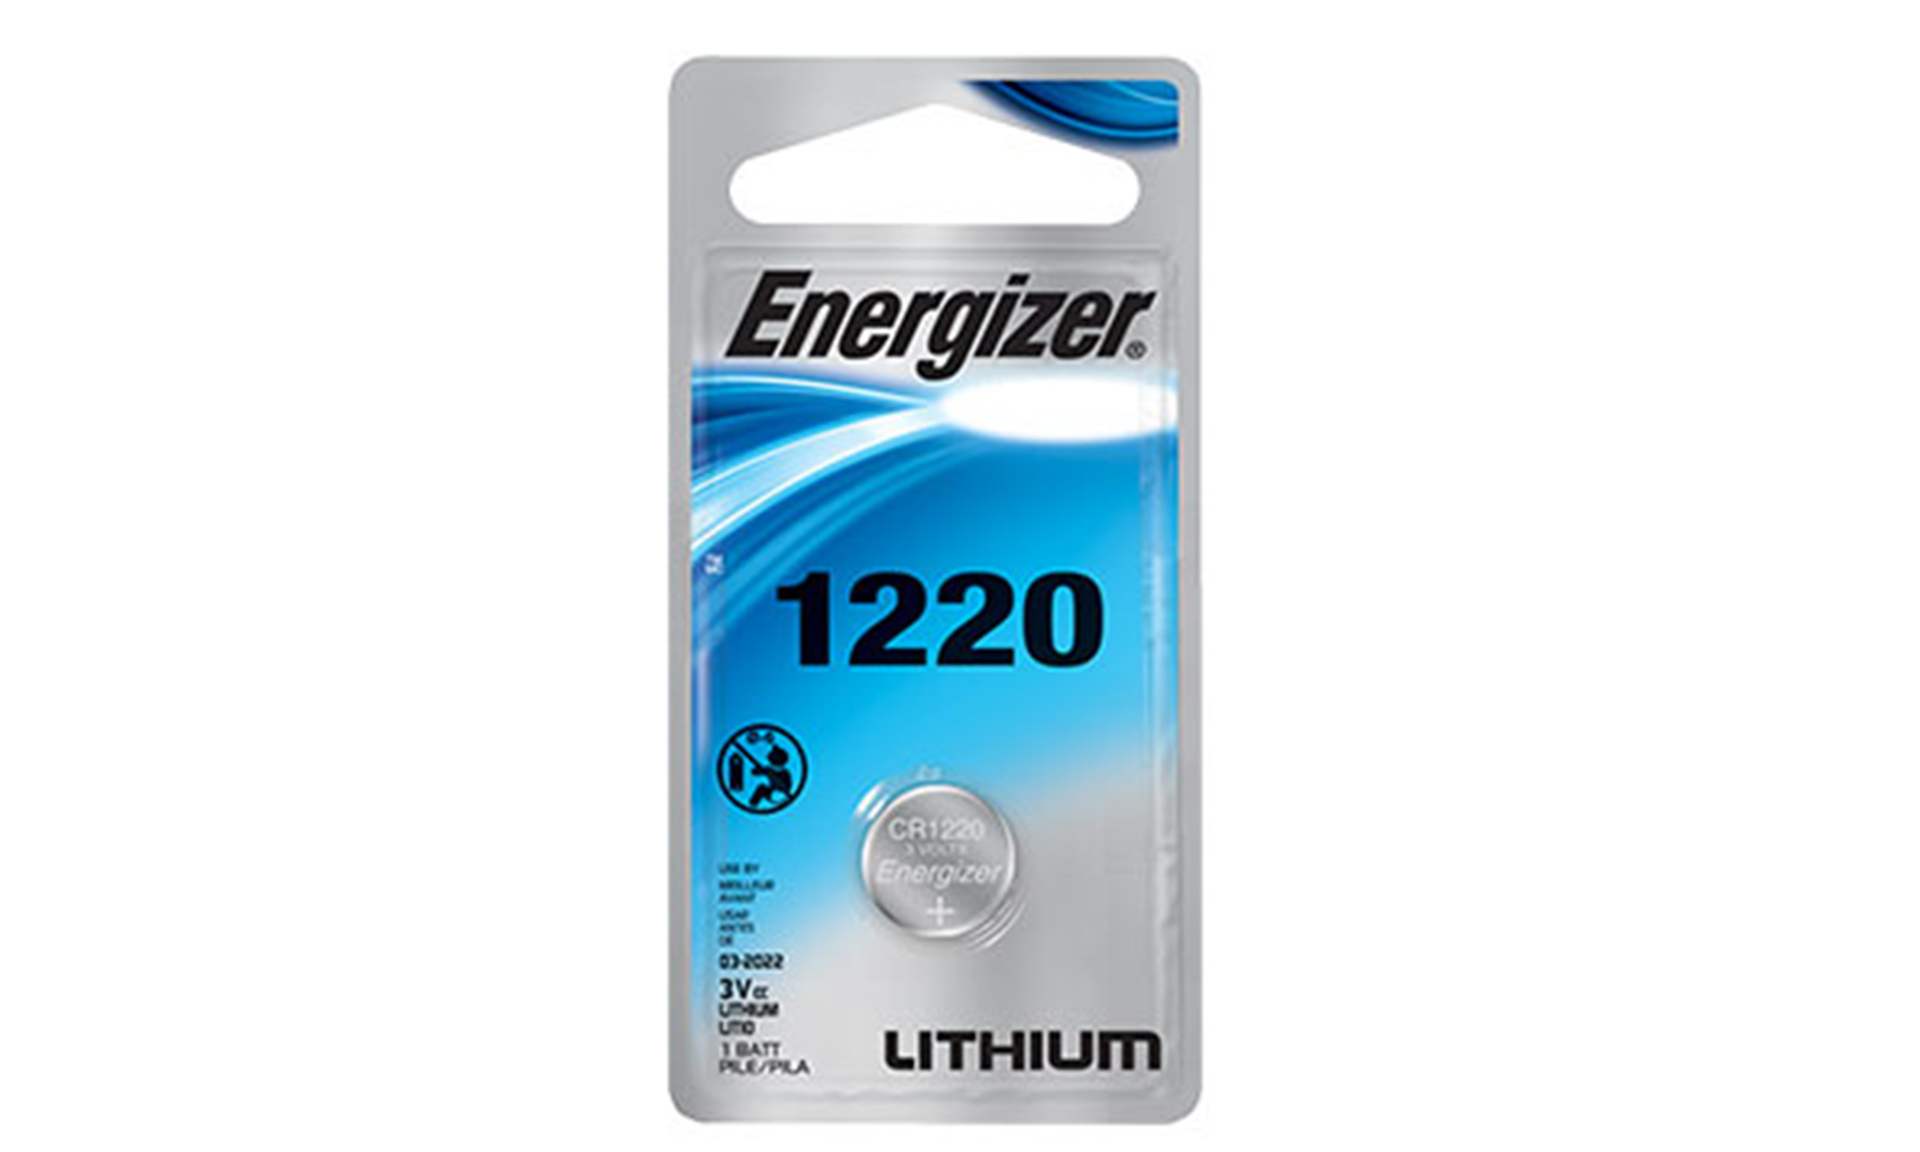 Energizer ECR1220 Battery 3V Lithium Coin Cell (1PC Blister Pack) (Child Resistant Packaging)